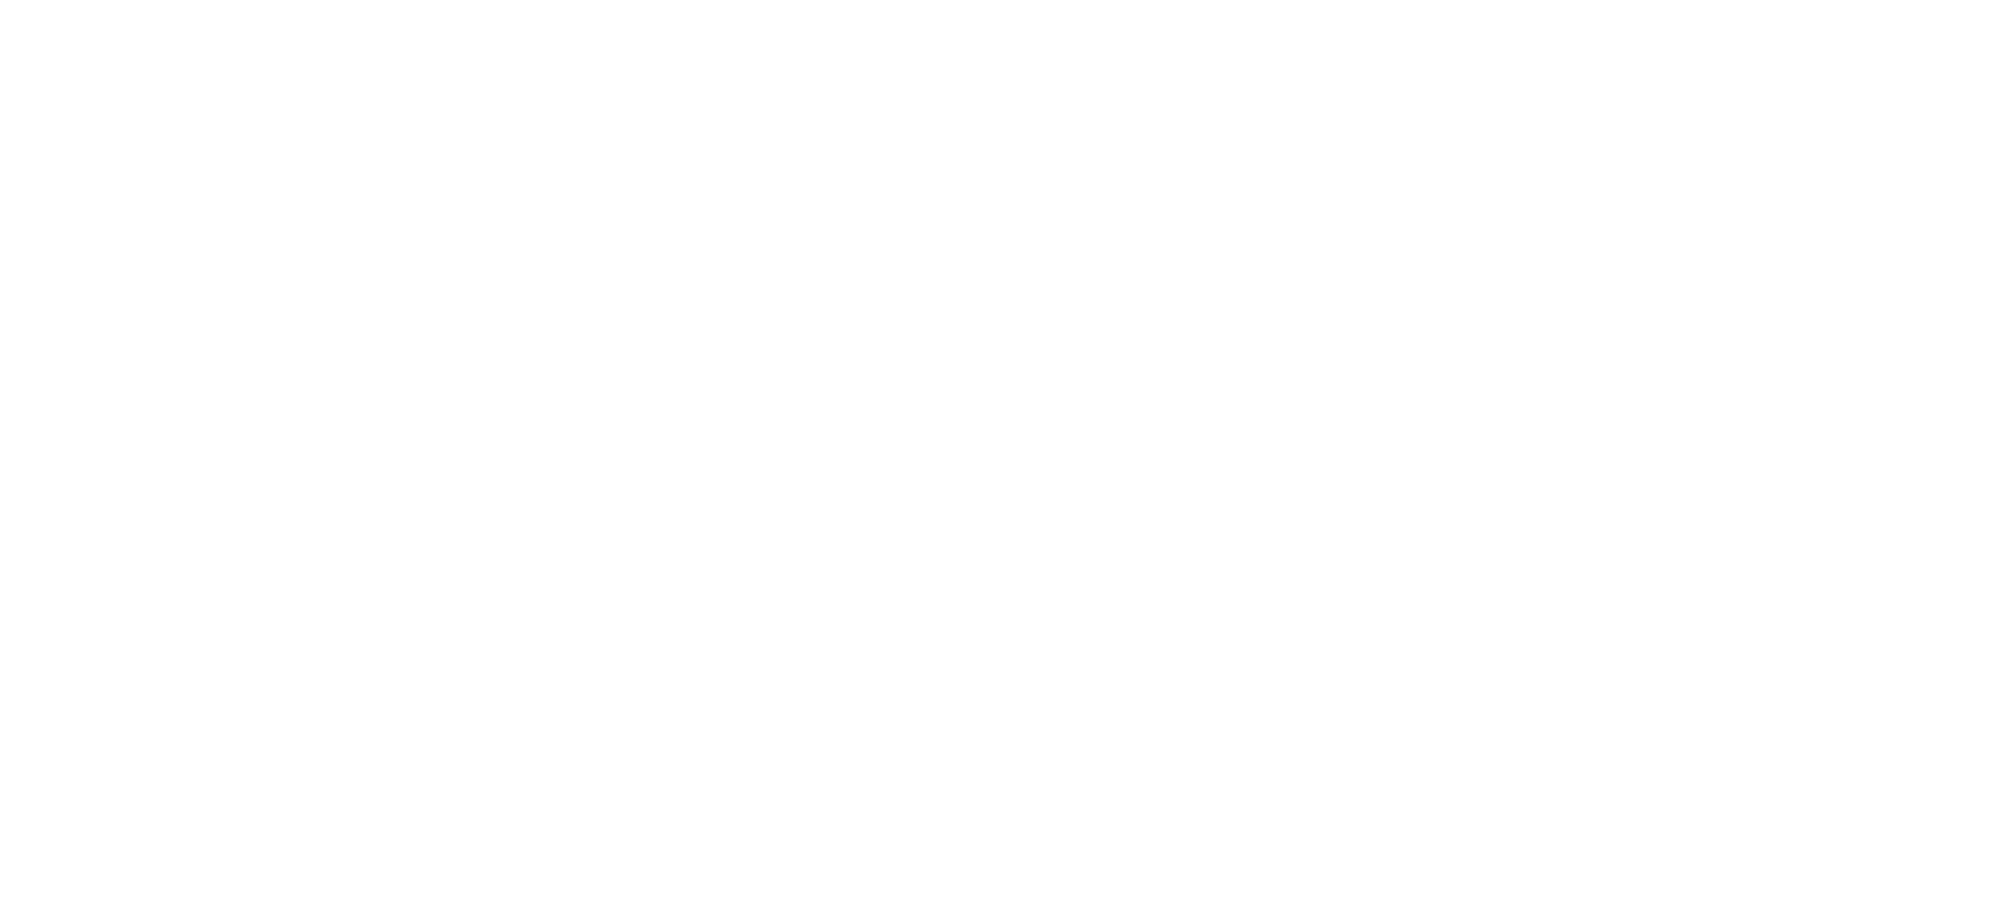 Podium Inc. logo